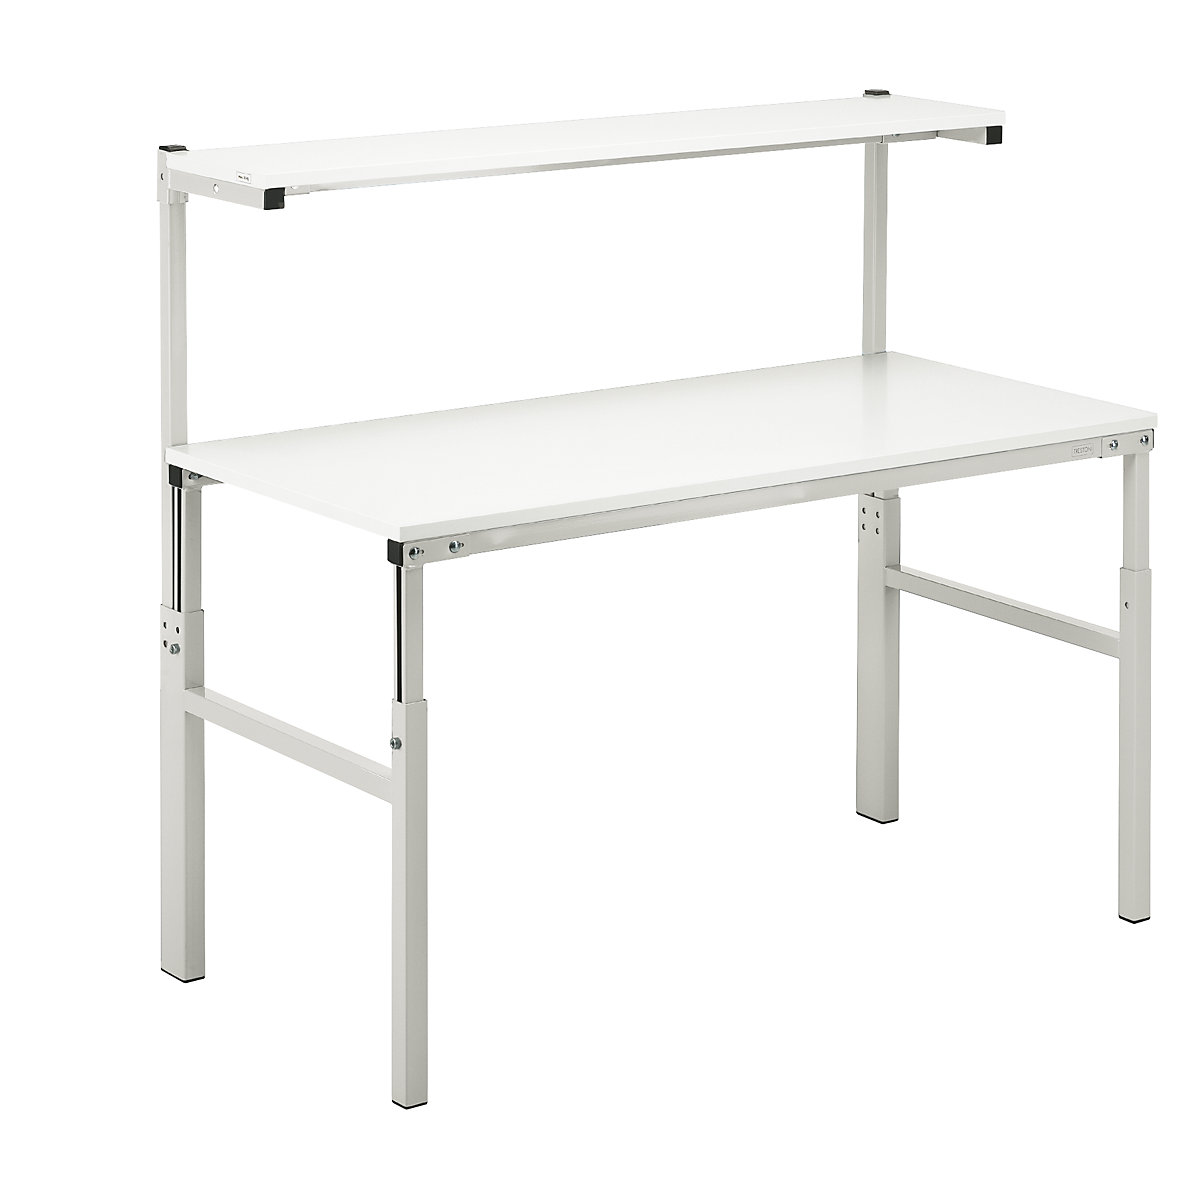 Standard table with shelf – Treston